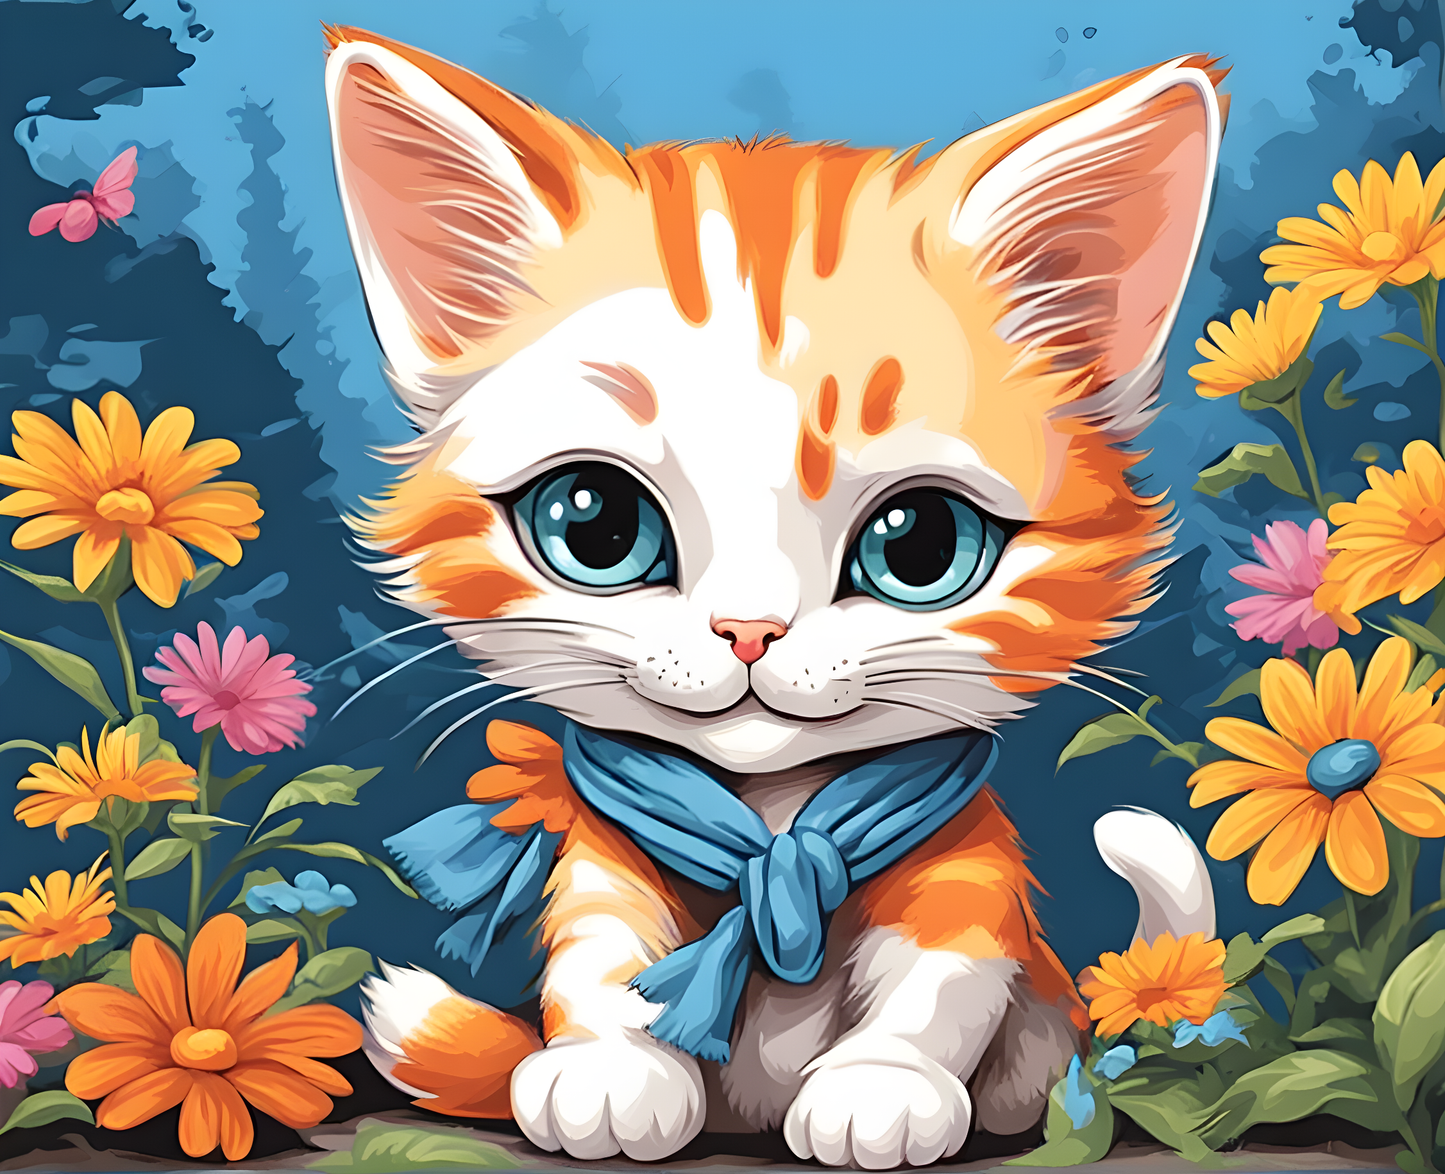 Cute Kitty (1) - Van-Go Paint-By-Number Kit